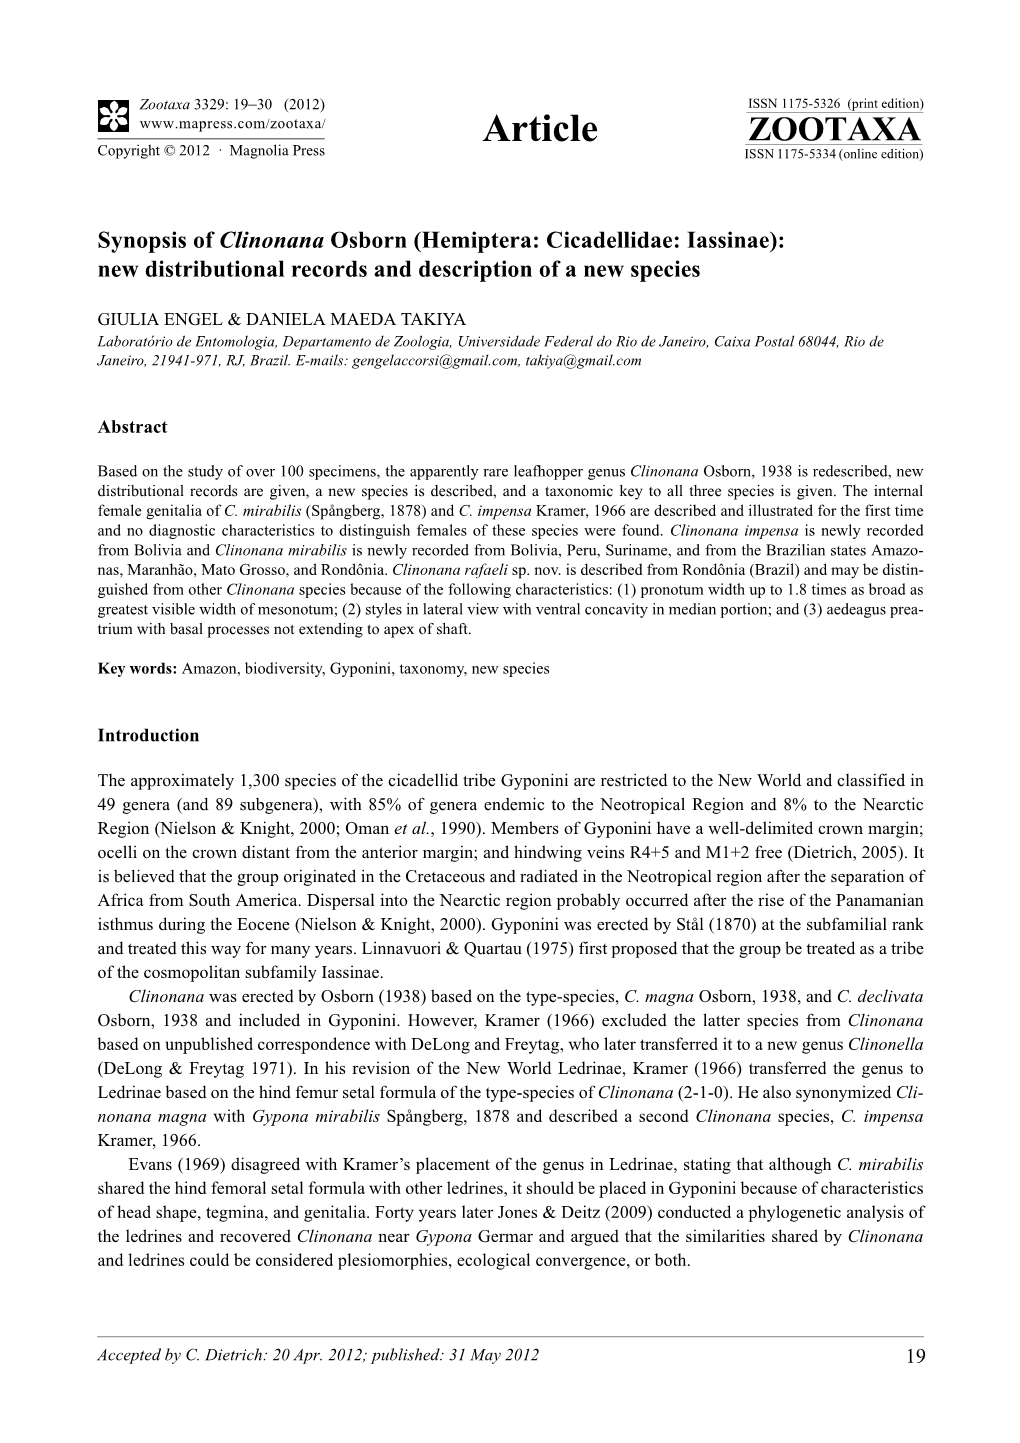 Synopsis of Clinonana Osborn (Hemiptera: Cicadellidae: Iassinae): New Distributional Records and Description of a New Species